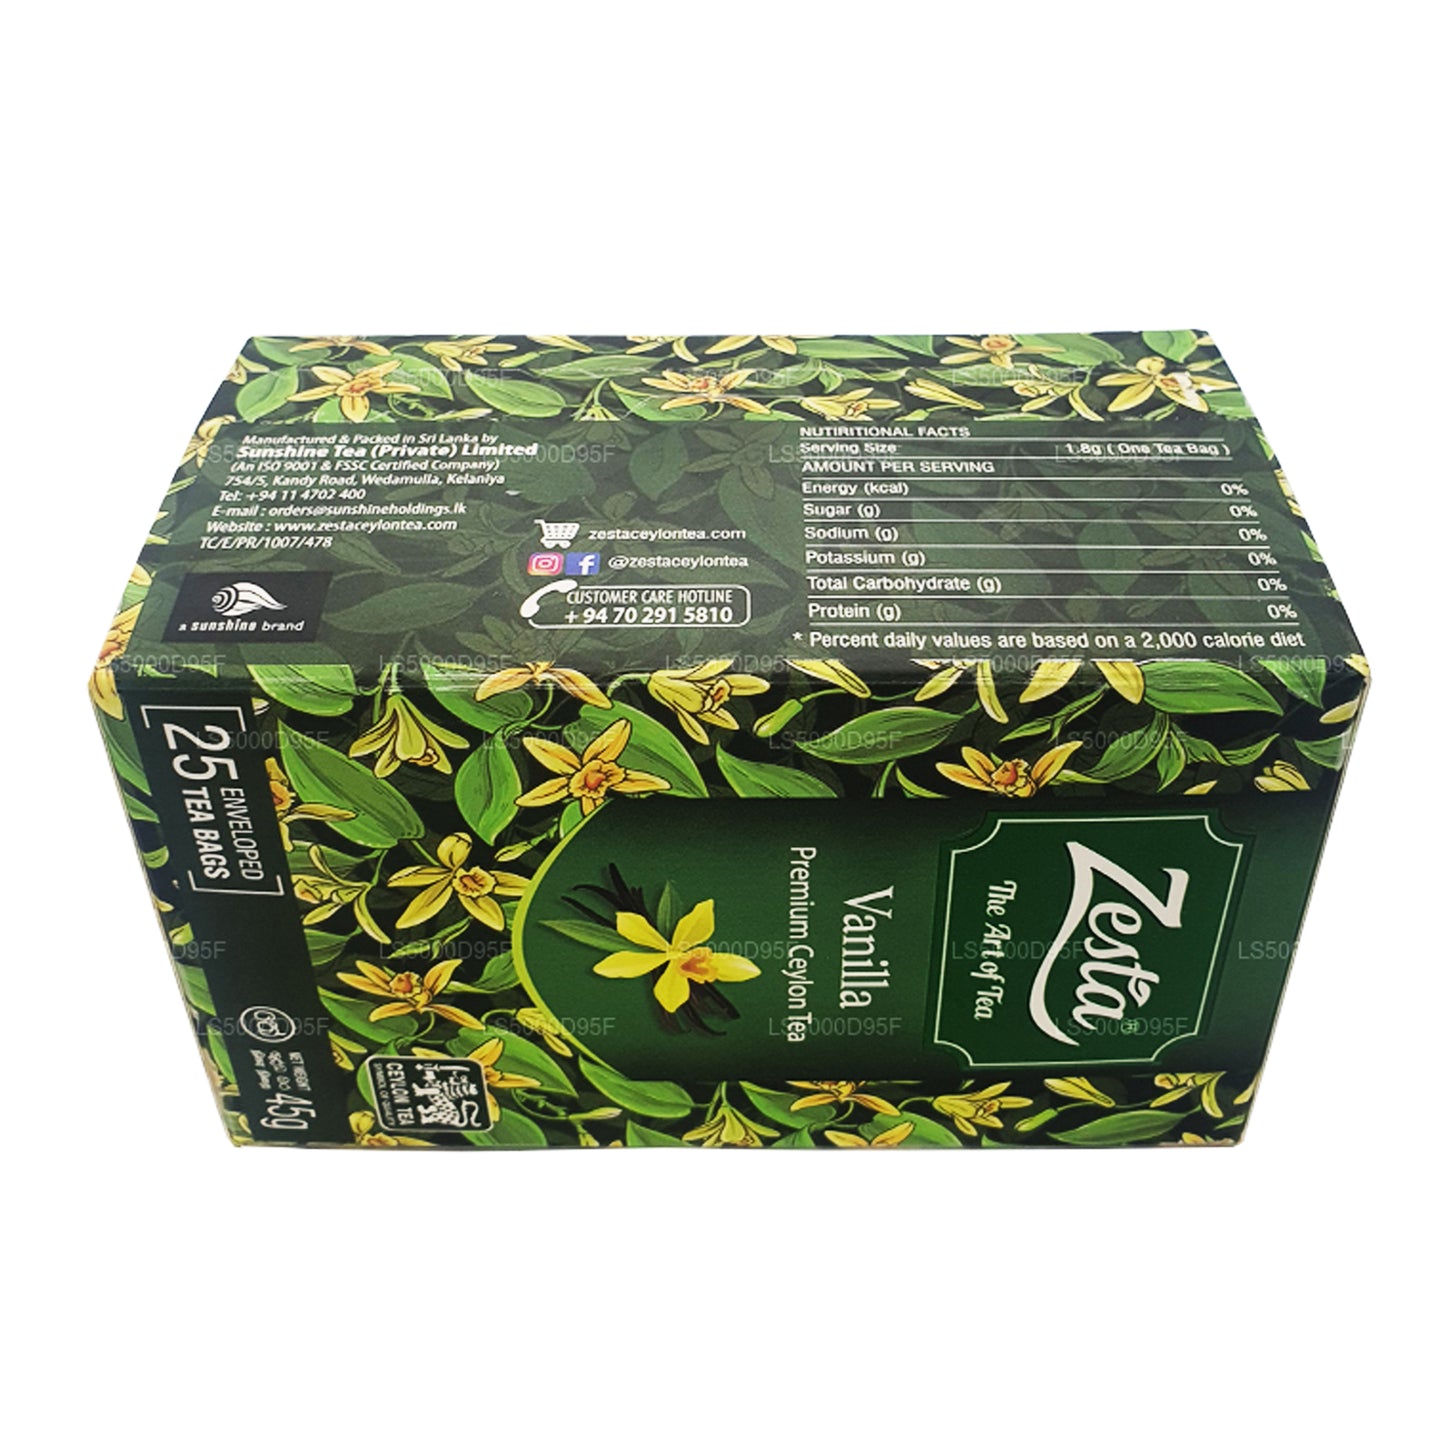 Zasta Waniliowa Herbata czarna (45g) 25 torebek